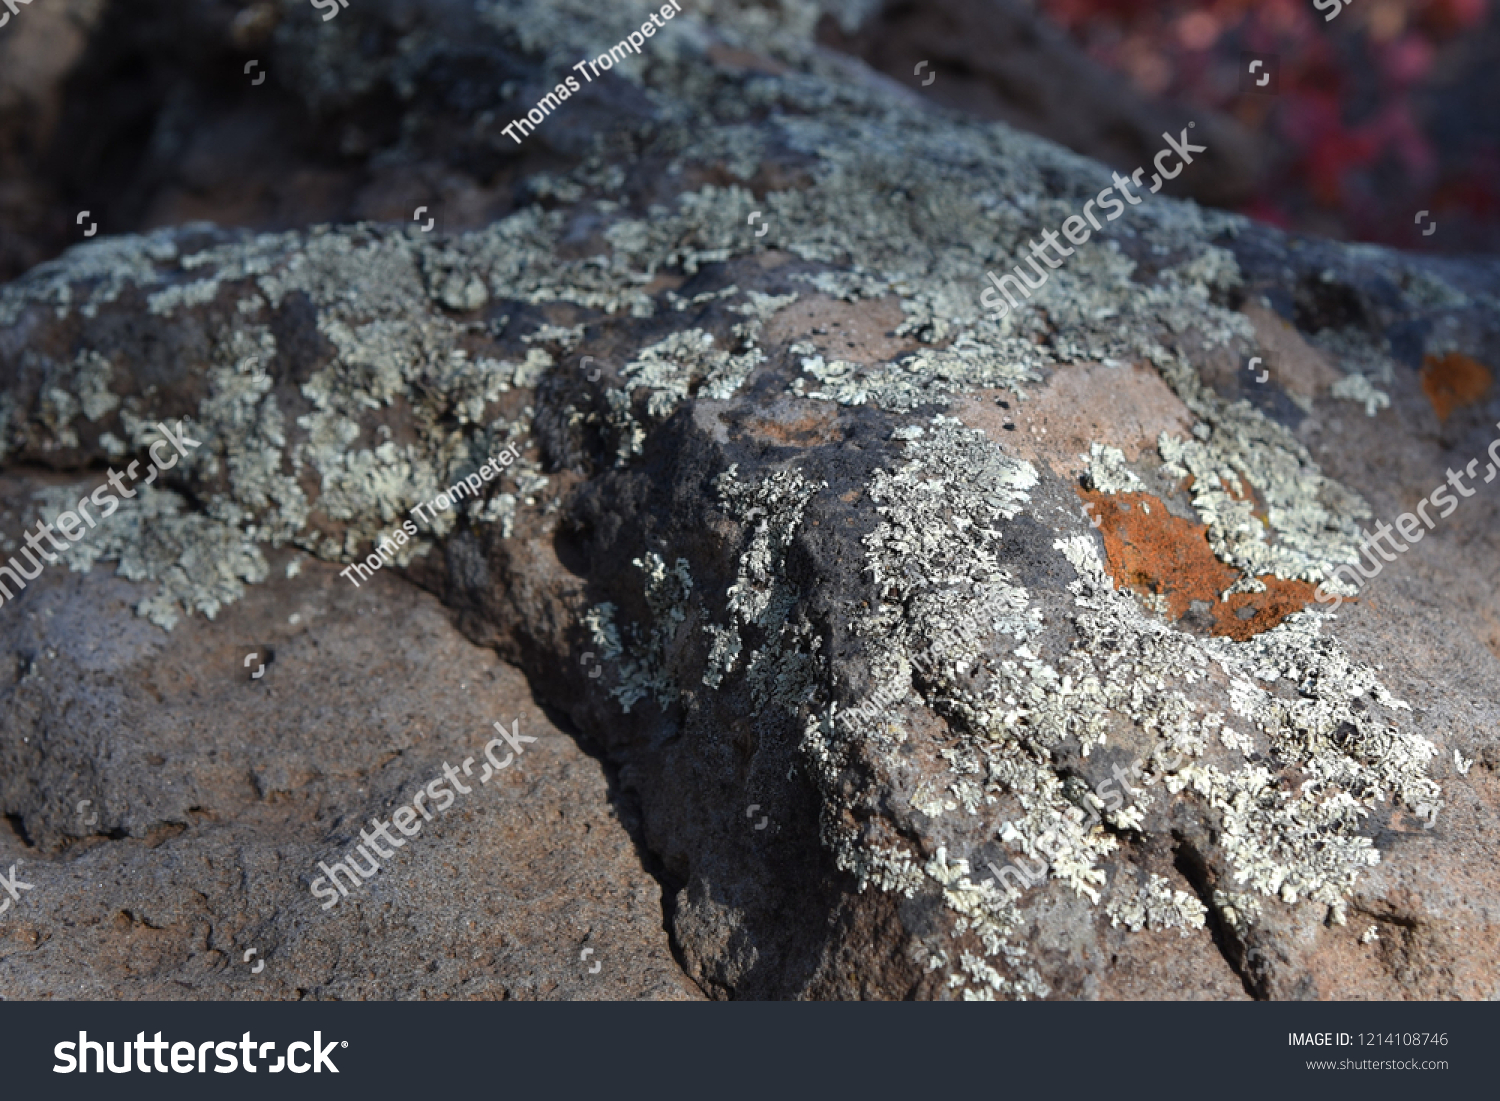 Lichen on a rock #1214108746